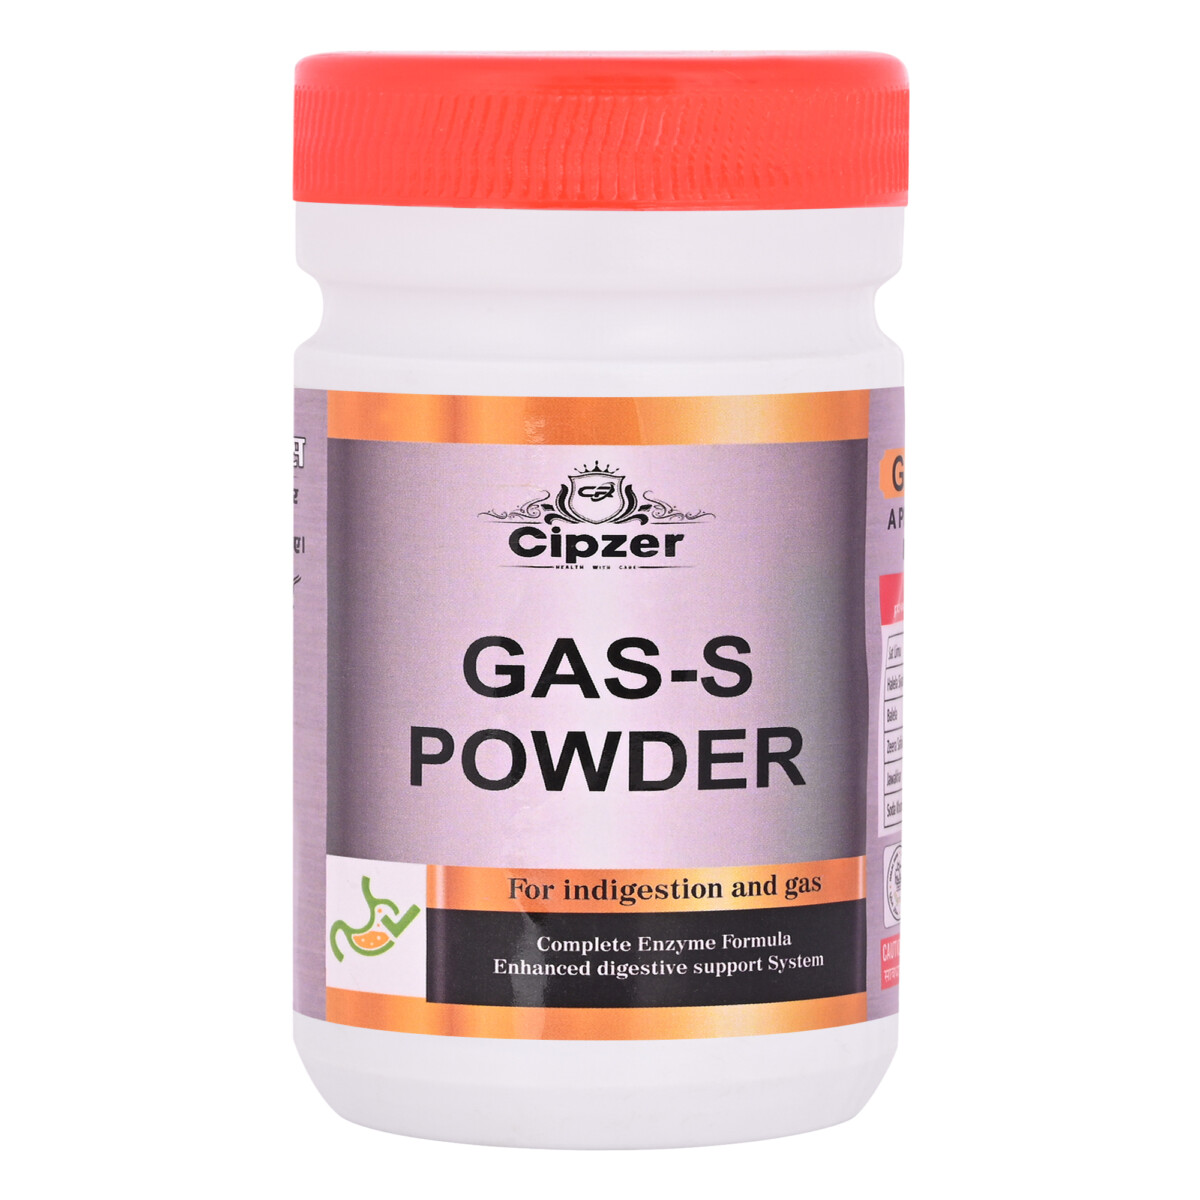 Cipzer gas-s powder